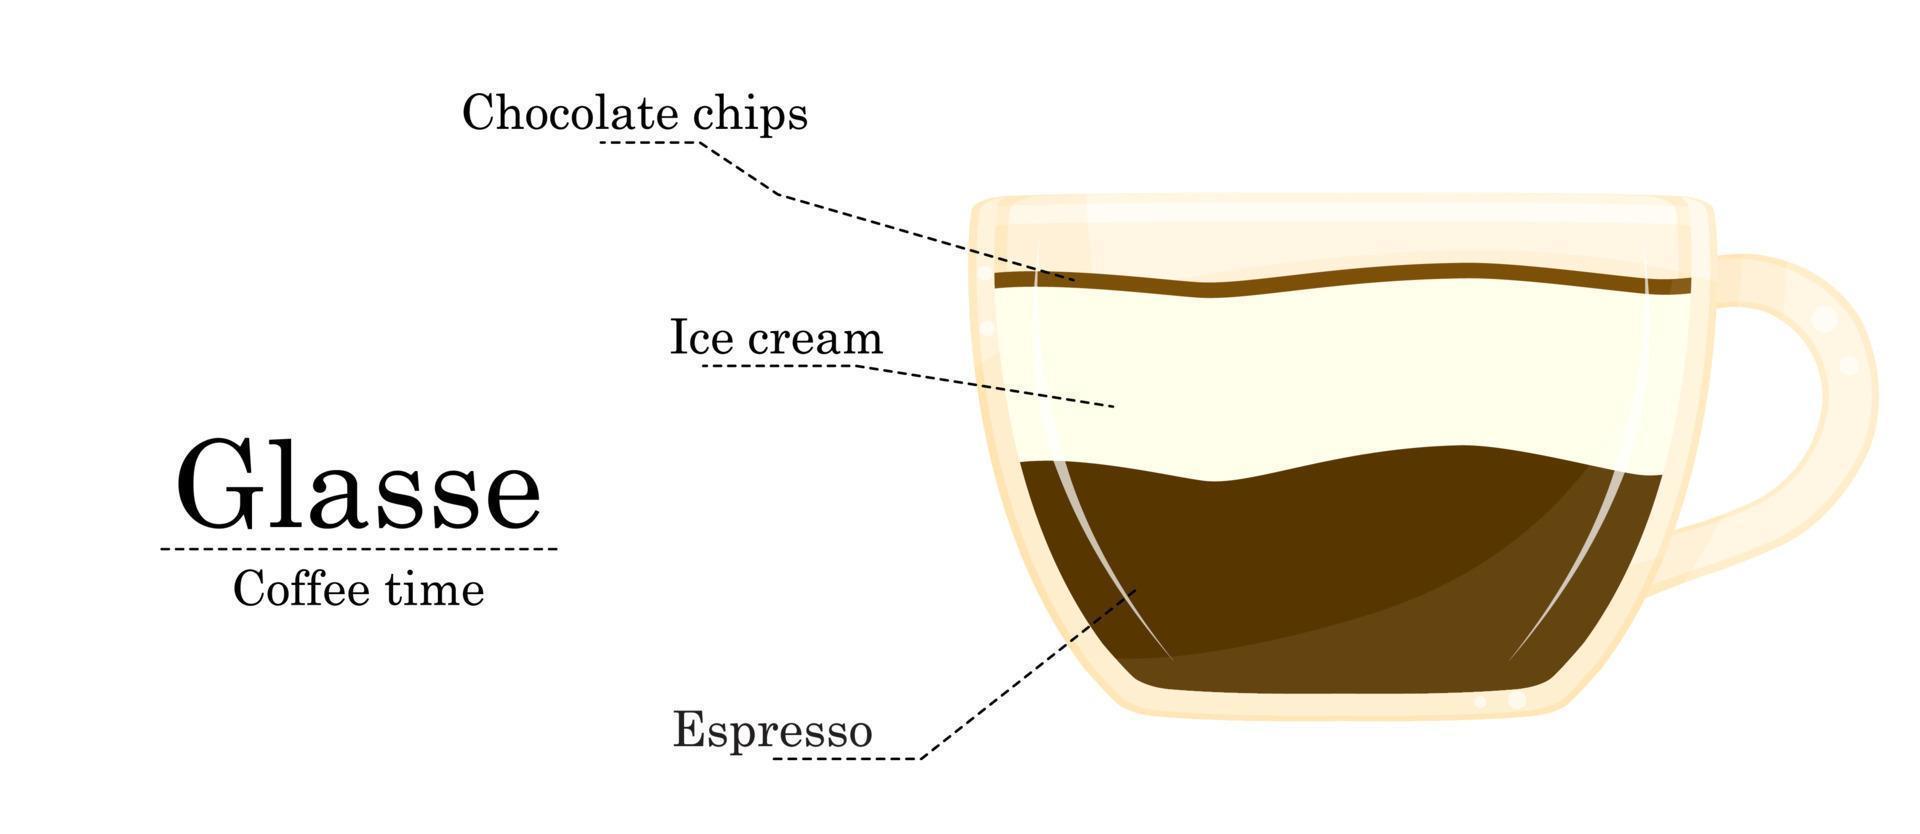 vettore illustrazione di caffè ricetta, glasse ricetta, caffè negozio illustrazione